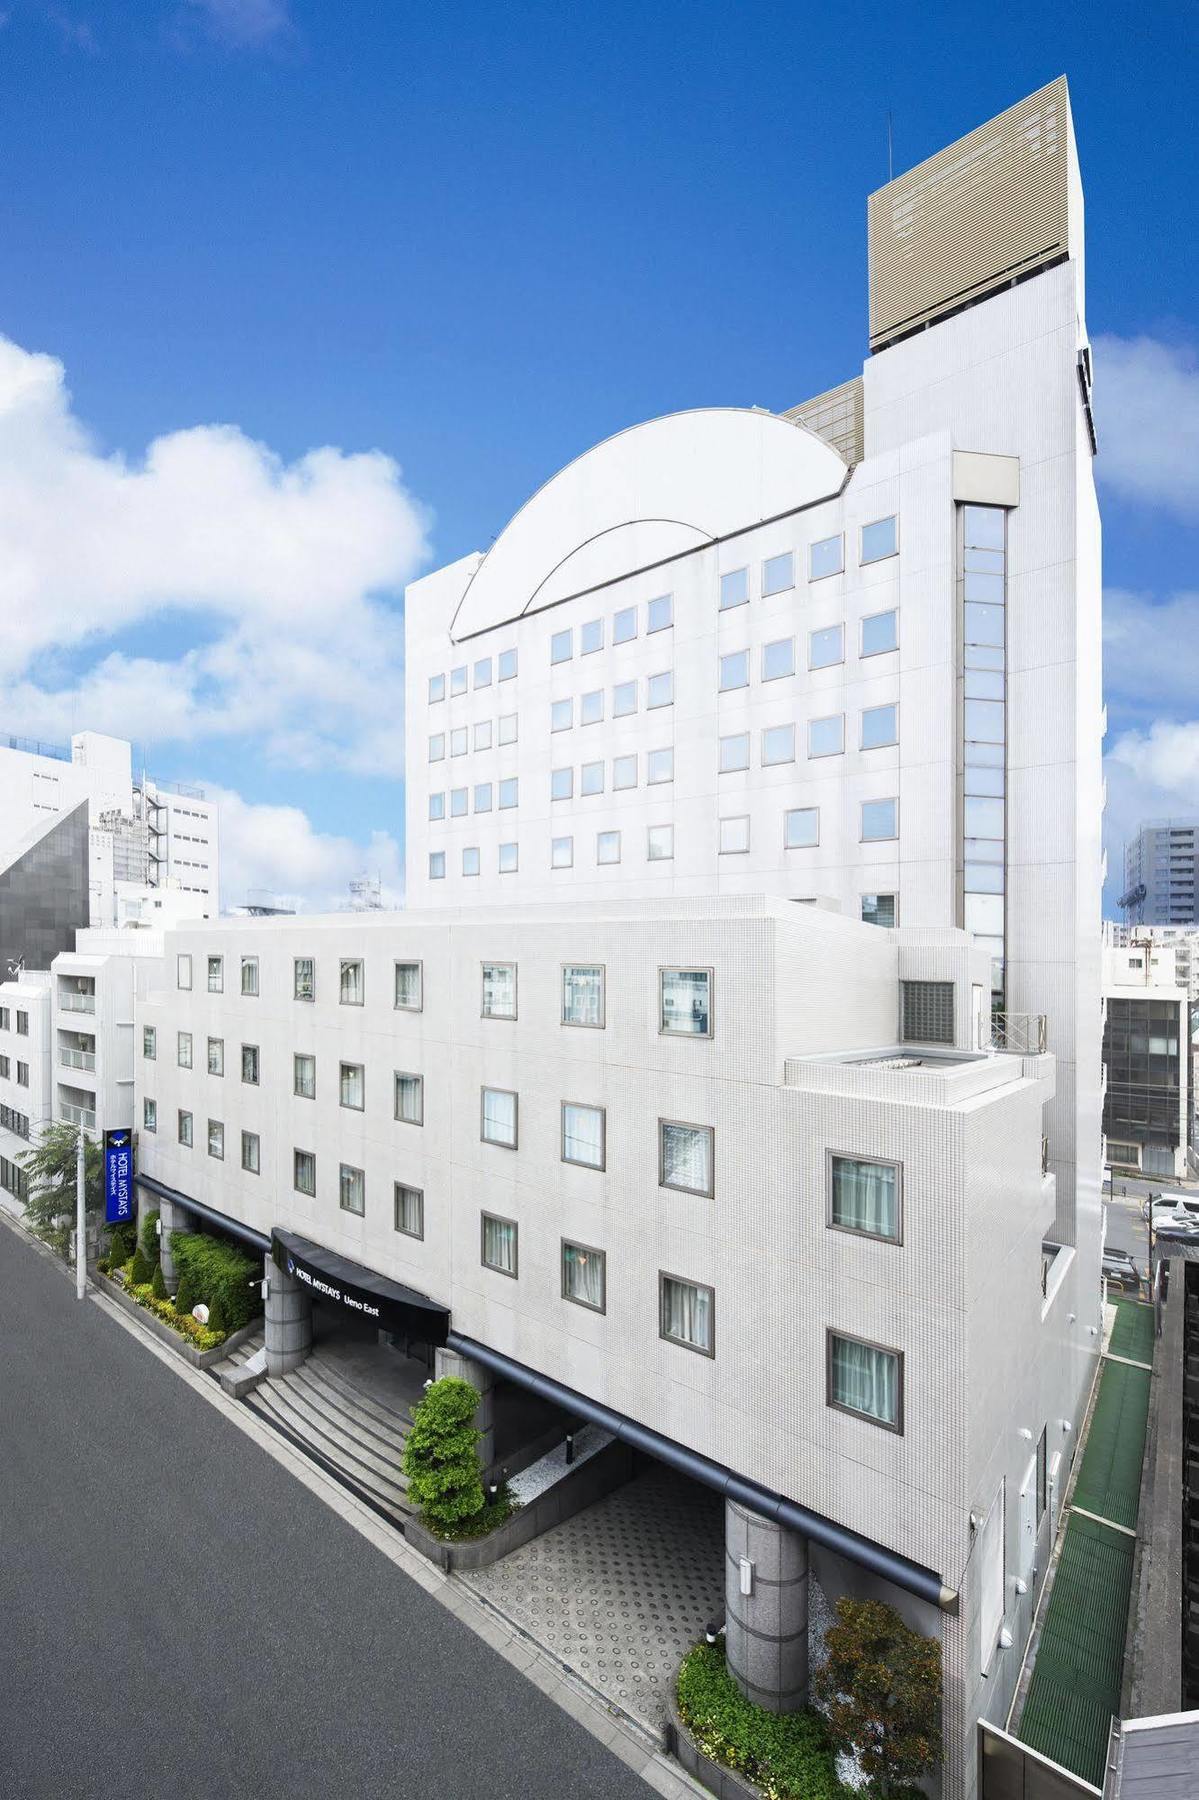 Hotel Mystays Ueno East Präfektur Tokio Exterior foto